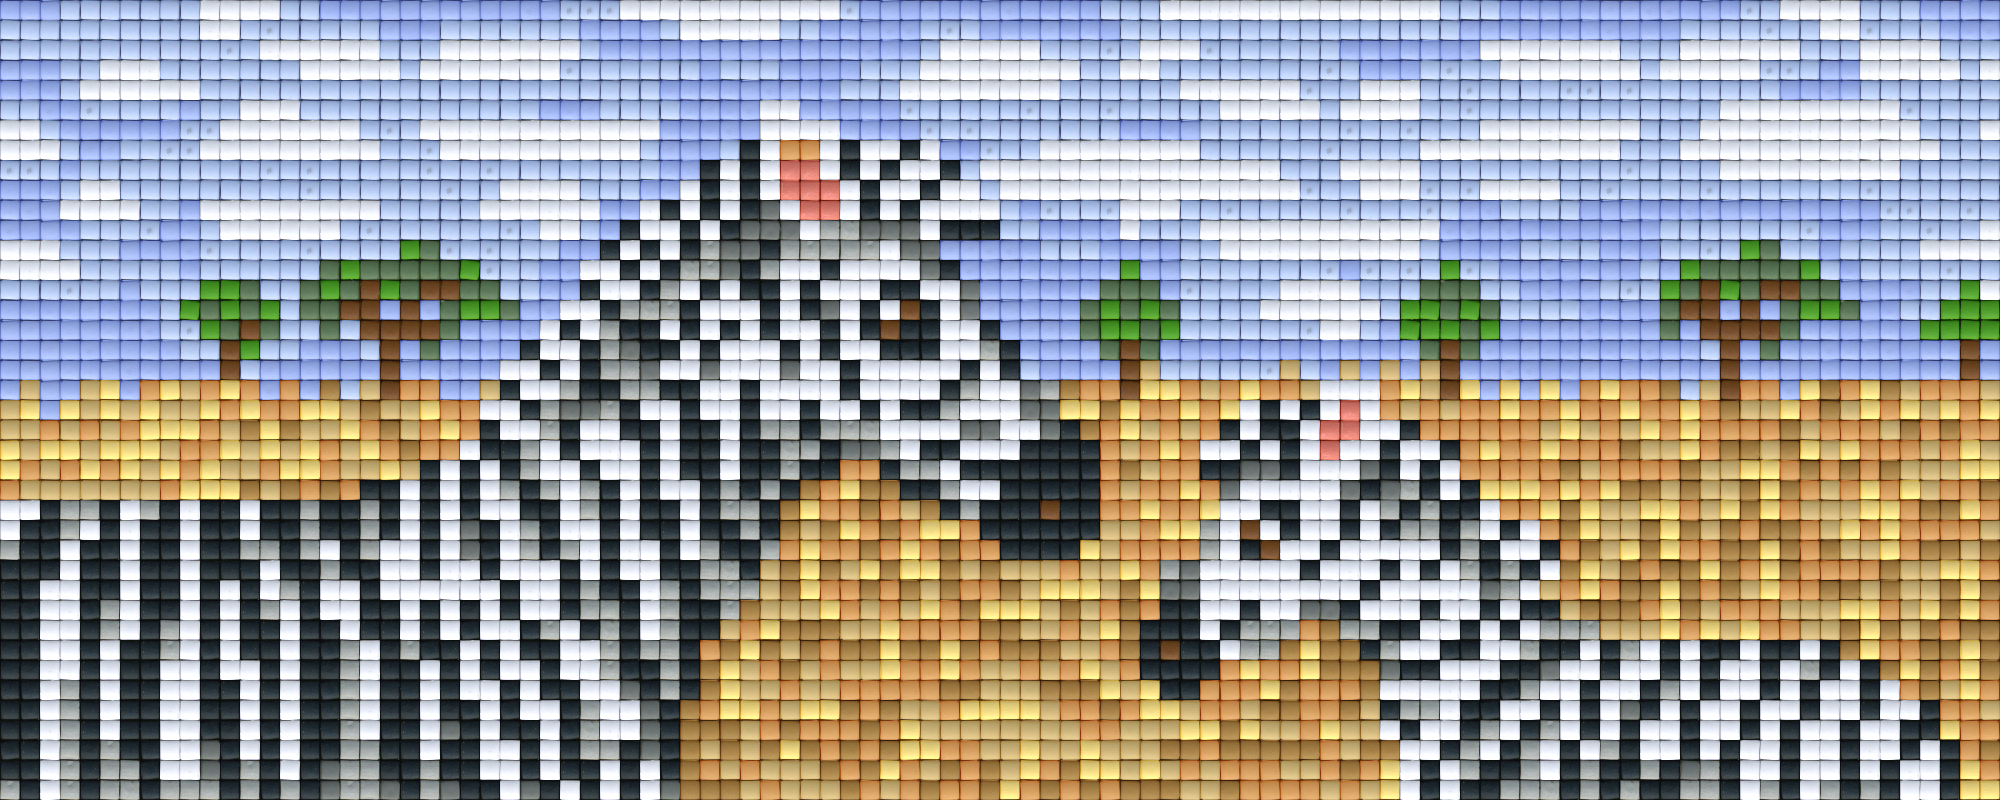 Pixel hobby classic template - zebras